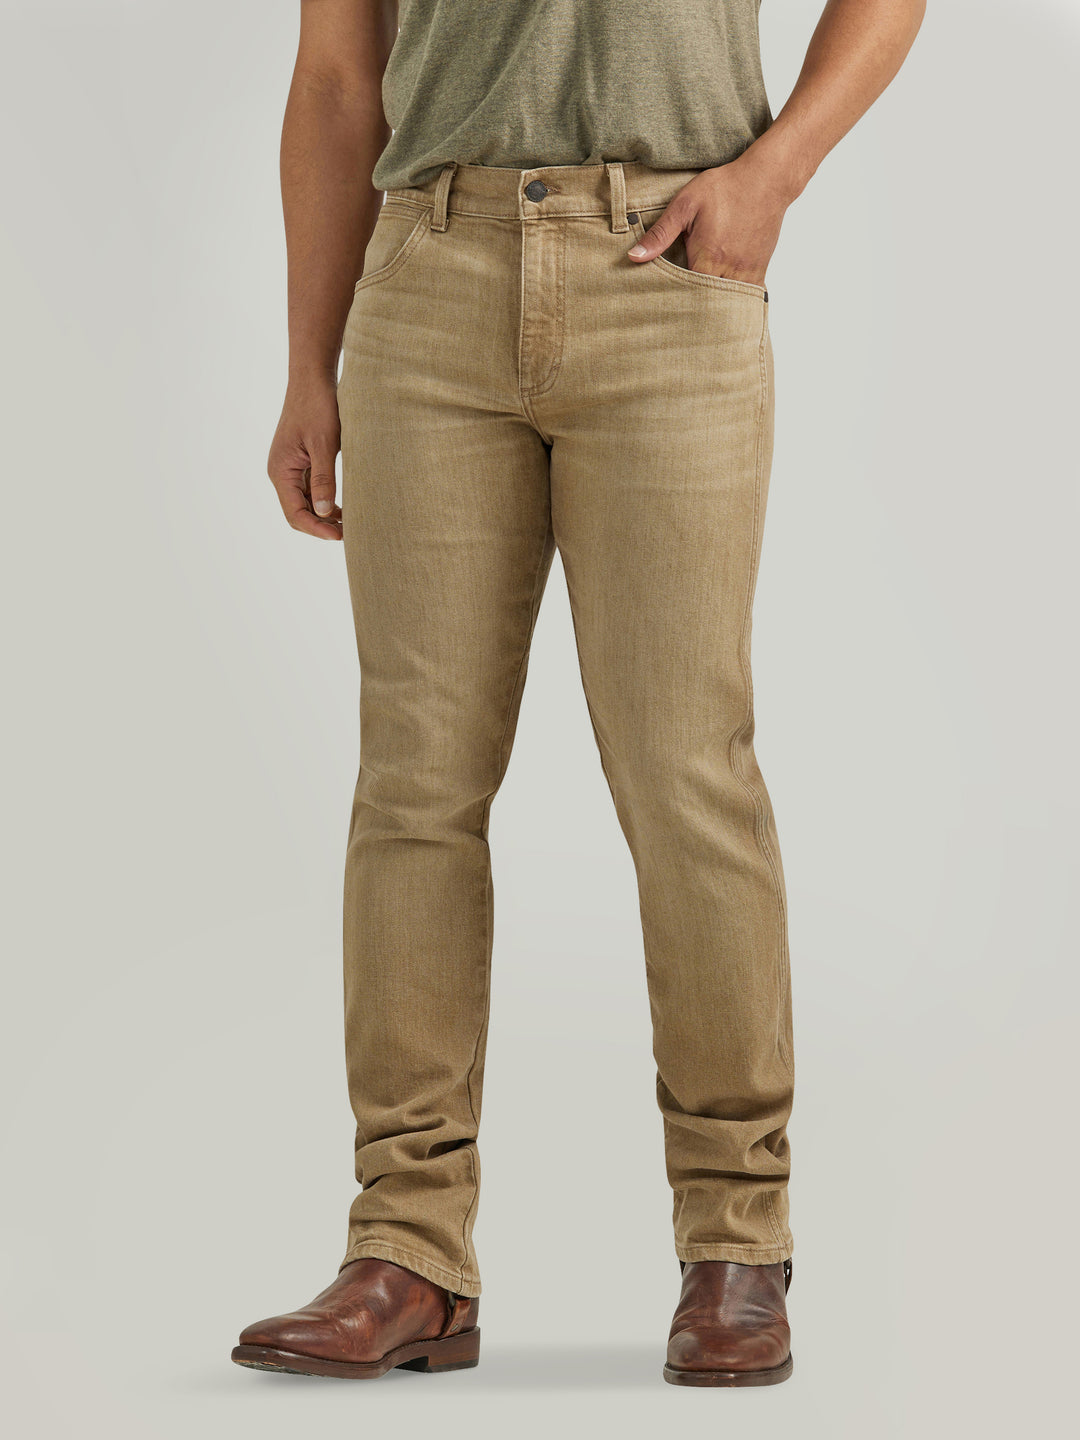 Wrangler Men's Saddle Color Washed Retro Slim Straight Jean